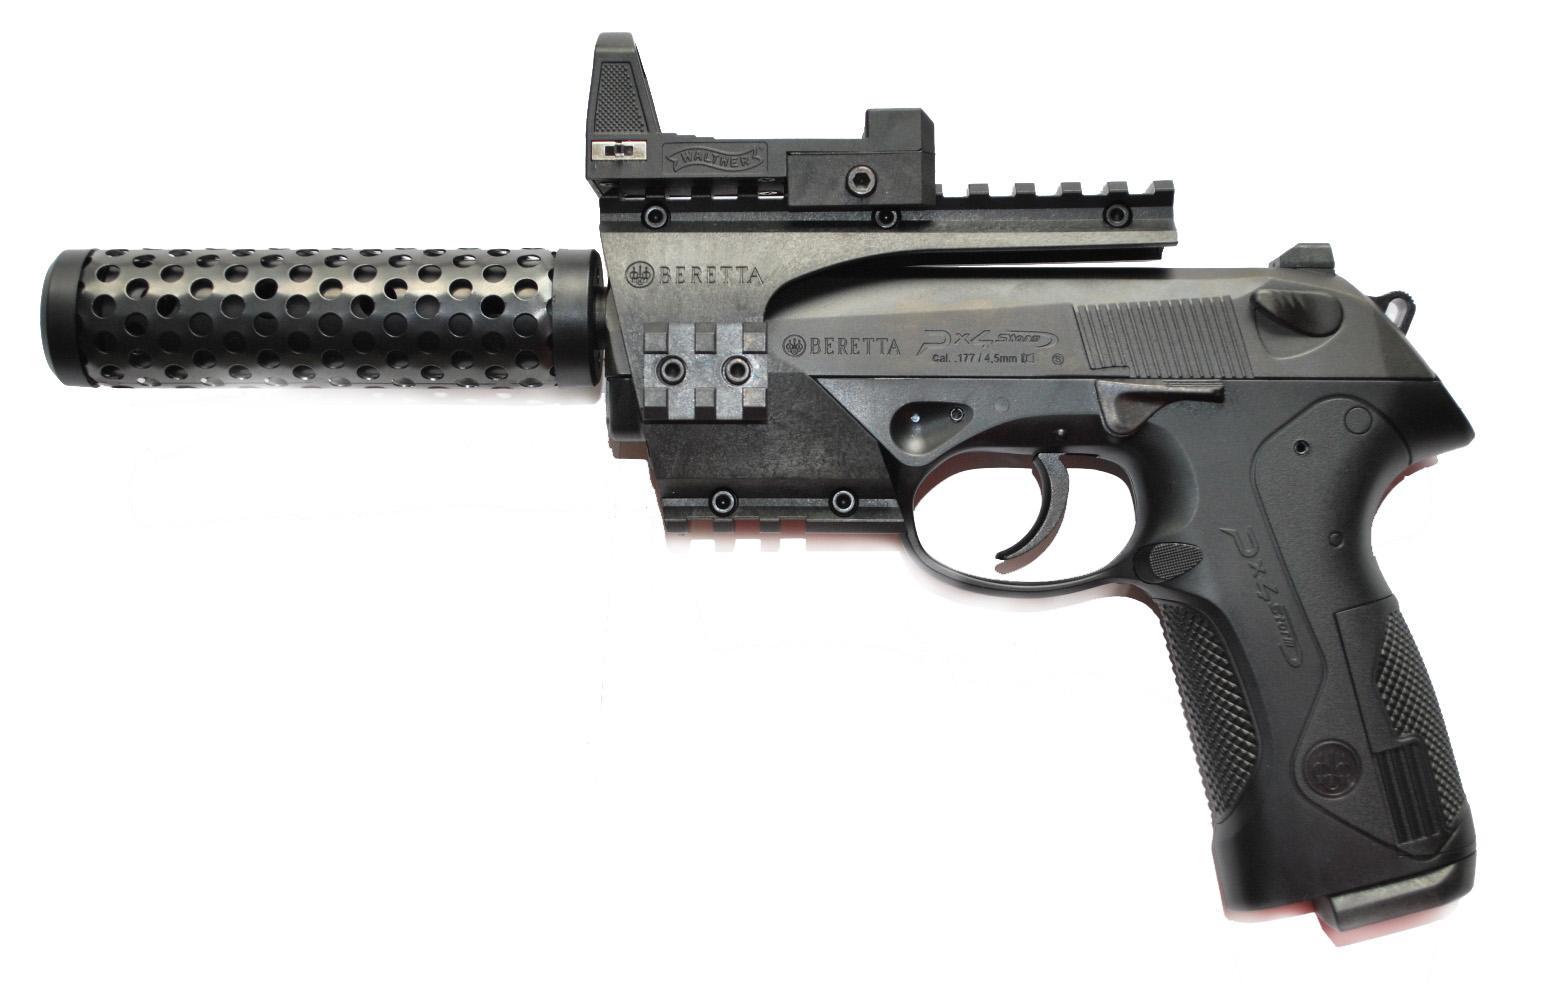   Beretta PX4 Storm (Umarex)